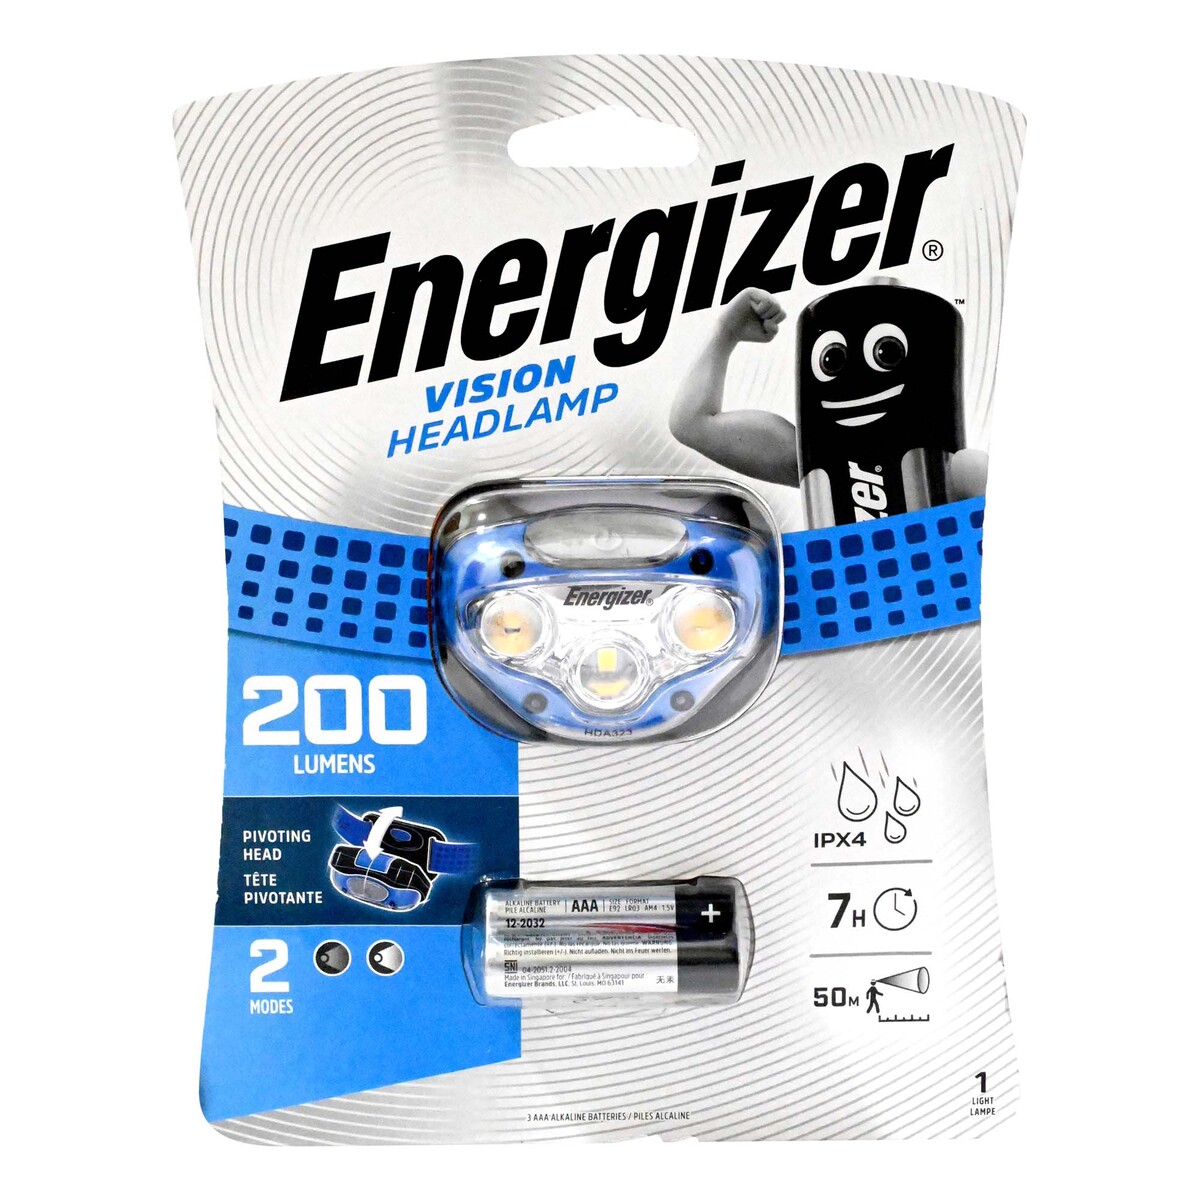 Energizer LED Headlight, 200 Lumens, 6 LED, Blue, HDL33A2WB